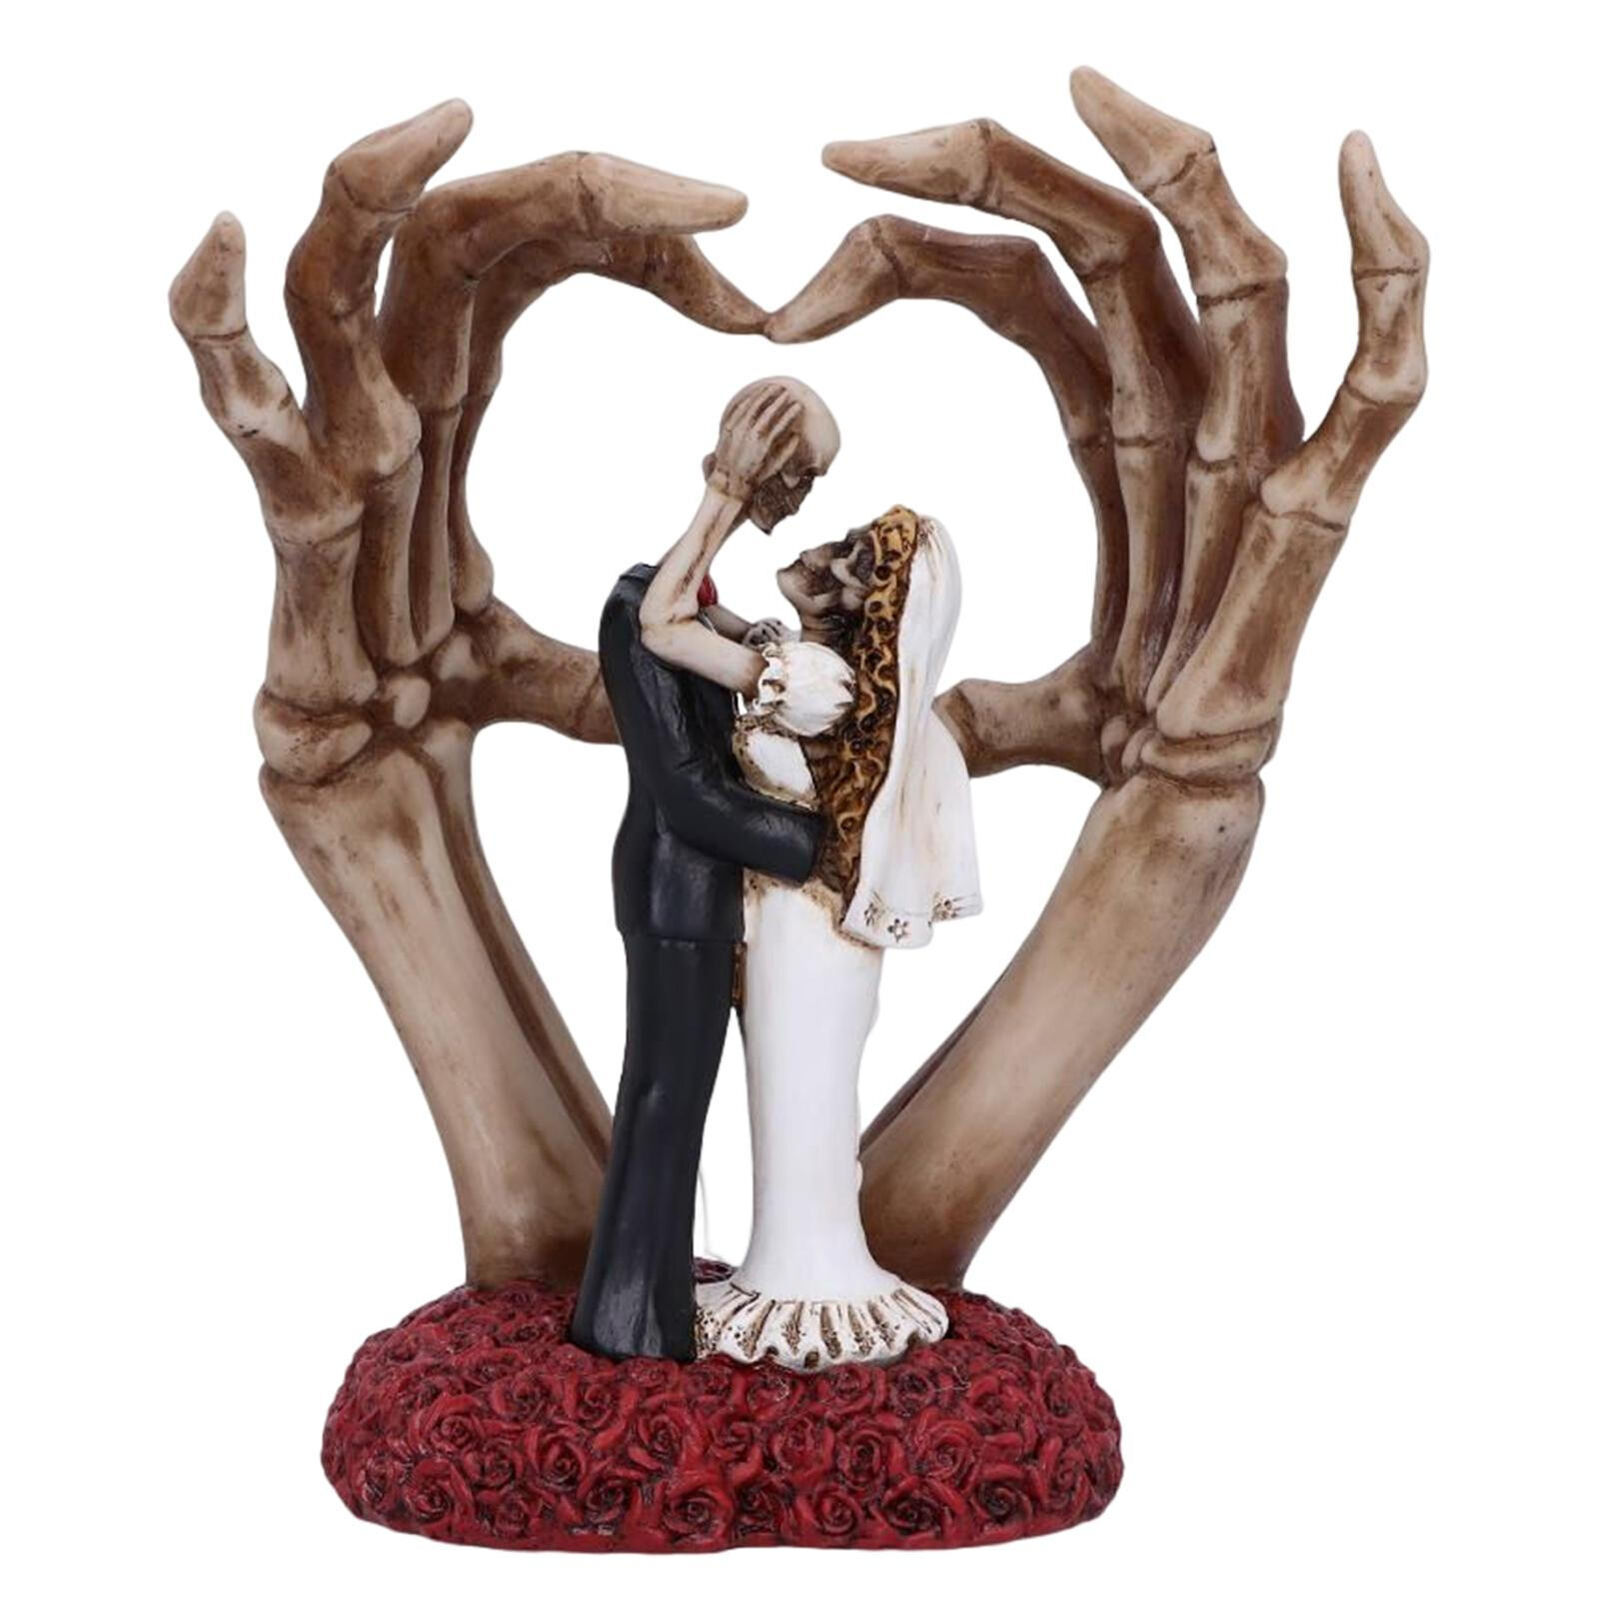 Wedding Skeleton Statue Love Never Dies Bride Groom Couple Figurine Ornament